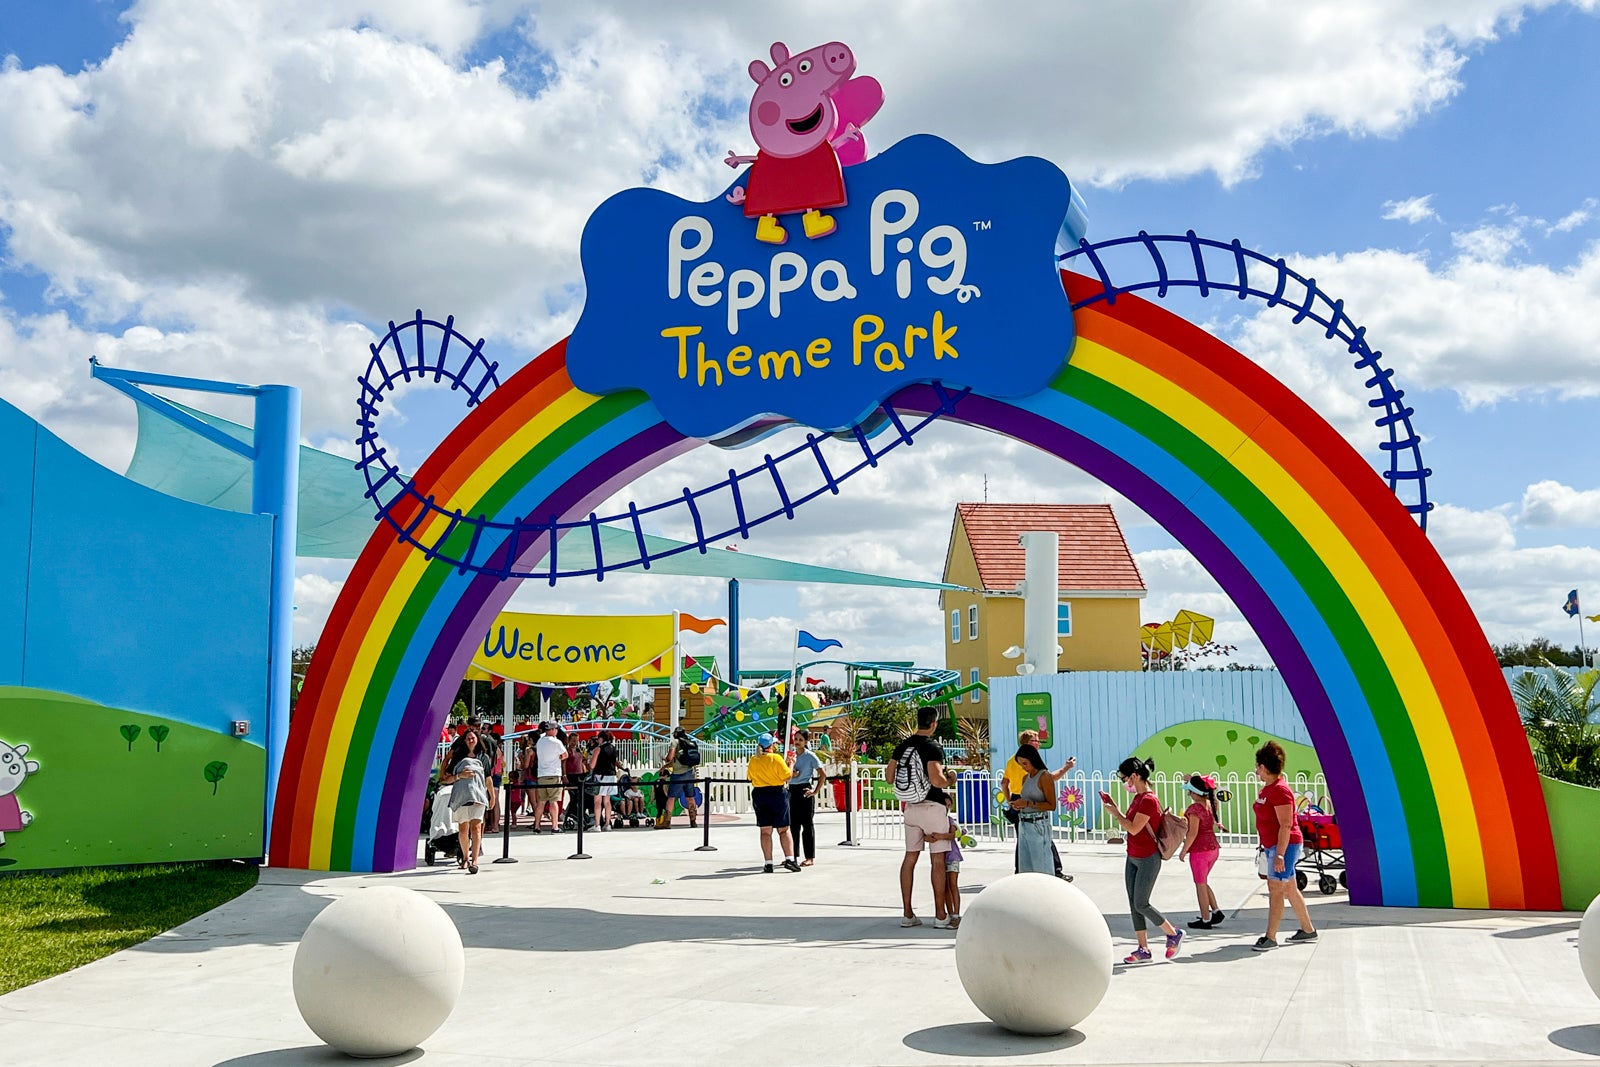 peppa pig theme park entrance